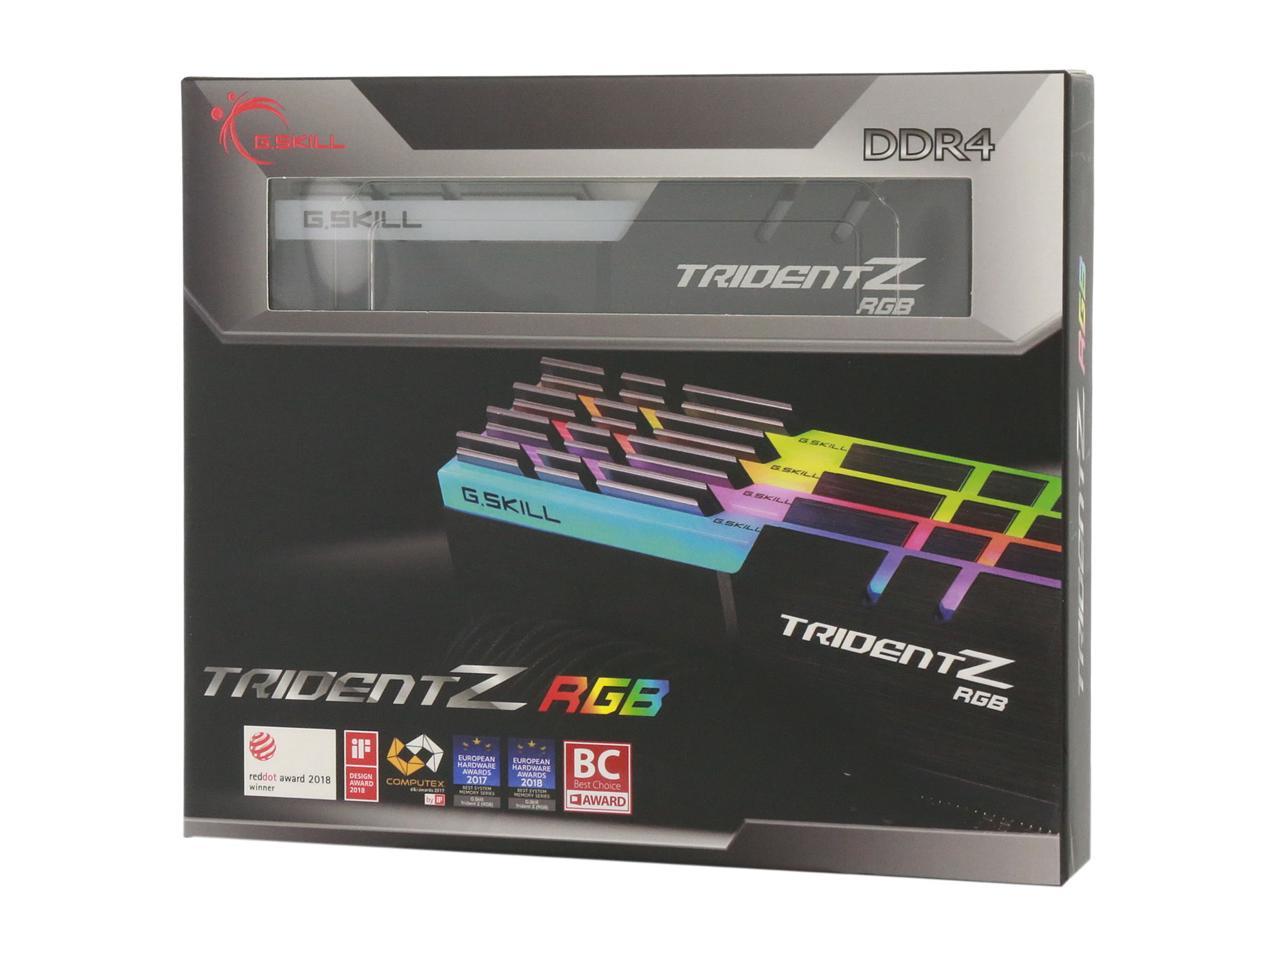 G.SKILL TridentZ RGB Series 64GB (4 x 16GB) 288-Pin DDR4 SDRAM DDR4 3600 (PC4 28800) Desktop Memory Model F4-3600C16Q-64GTZR